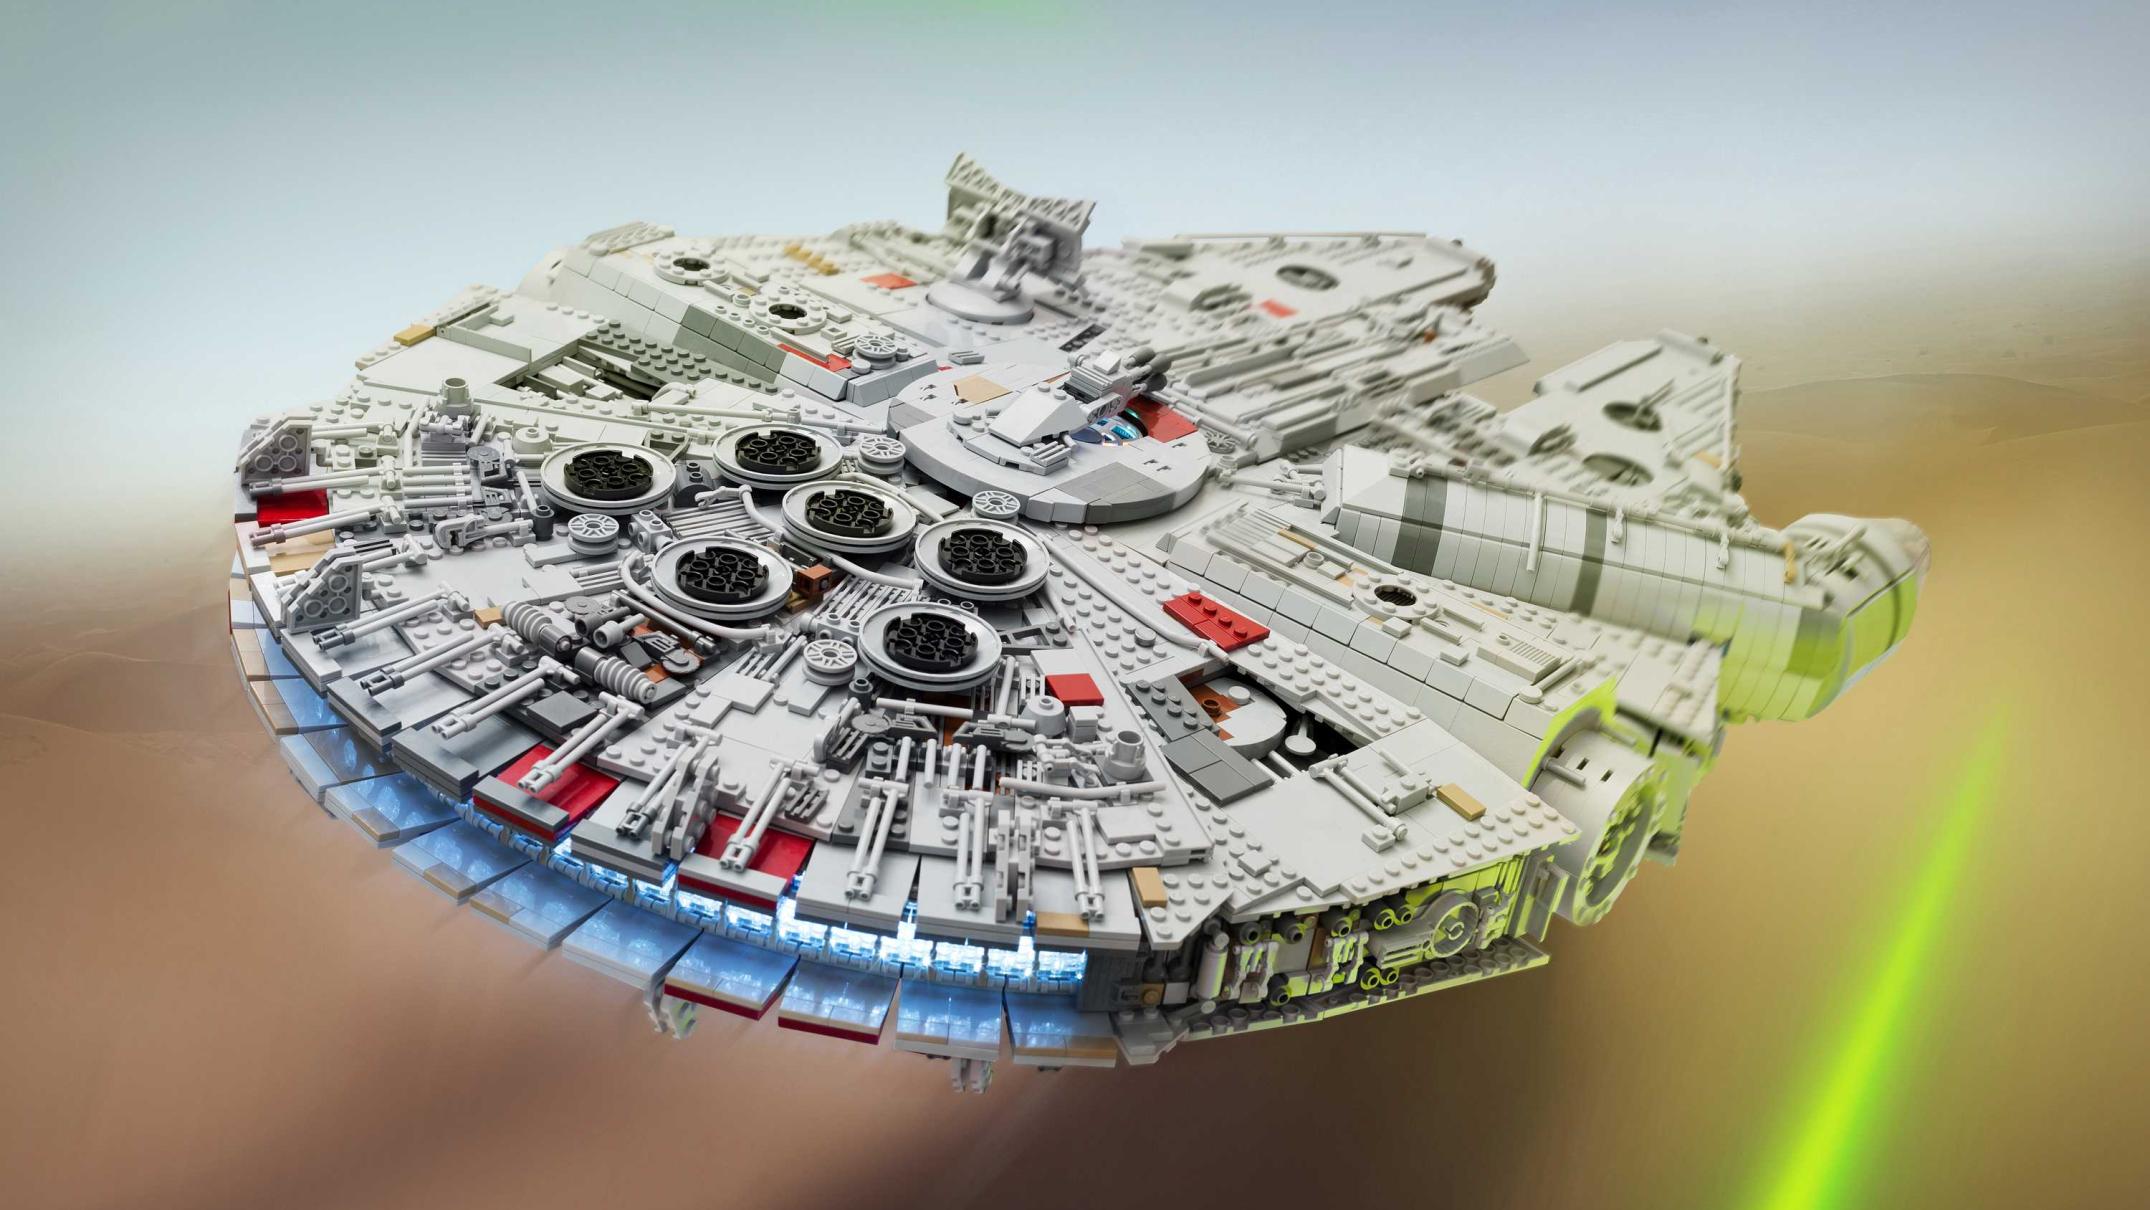 This astonishingly detailed LEGO Millennium Falcon took 7,500 pieces